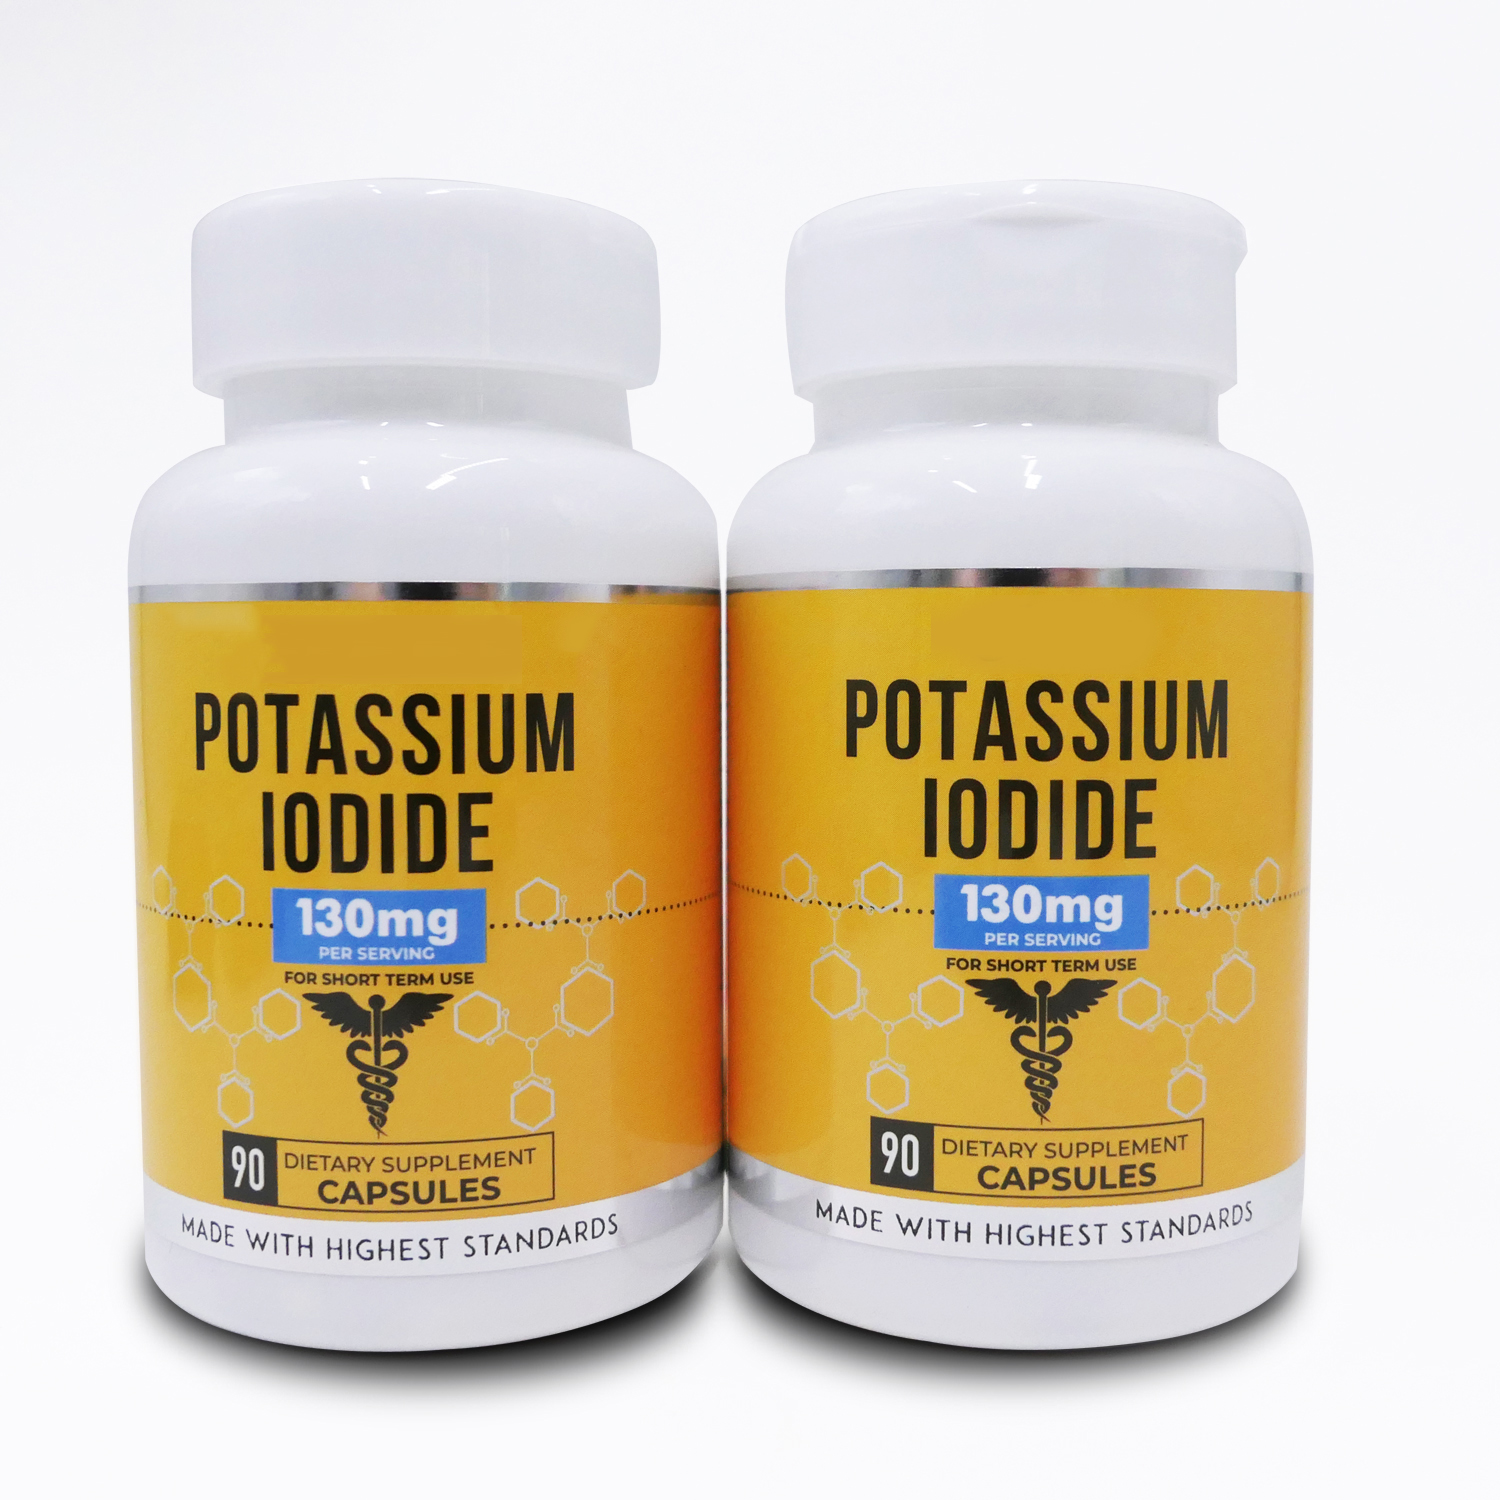 Potassium Iodide 130mg - 90 Capsules - Emergency Survival Supplement